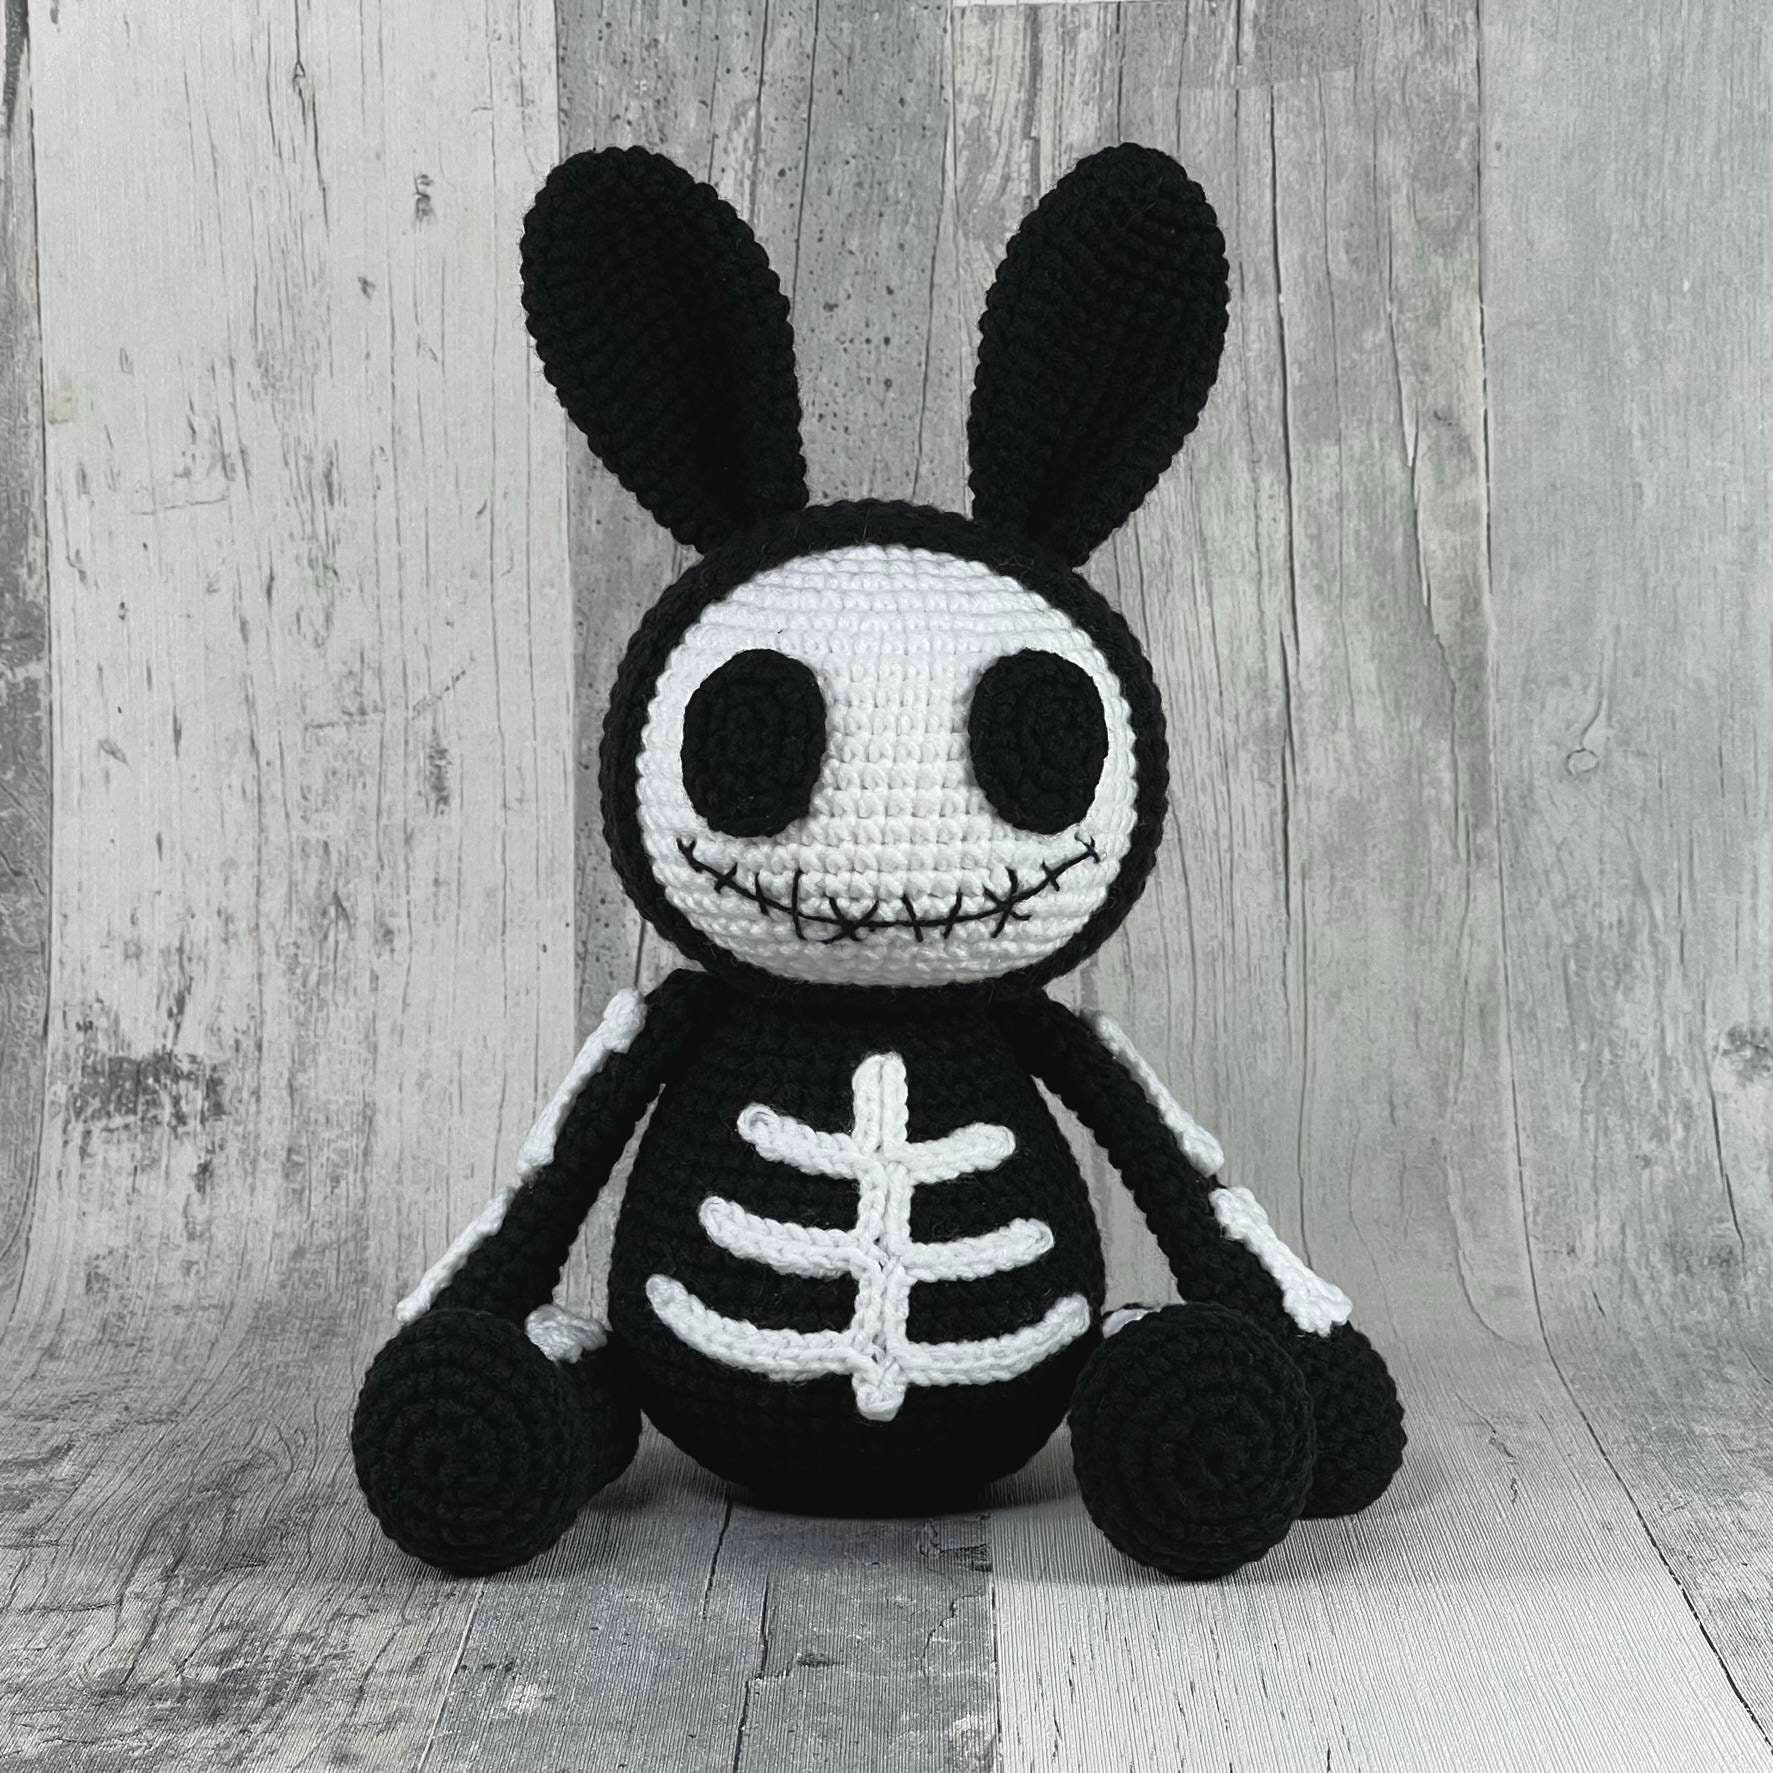 8 Creepy Cute Bunny Sewing Pattern PDF, Voodoo Stuffed Animal Tutorial,  Halloween Decor, Spooky Toy Rabbit, Goth Doll